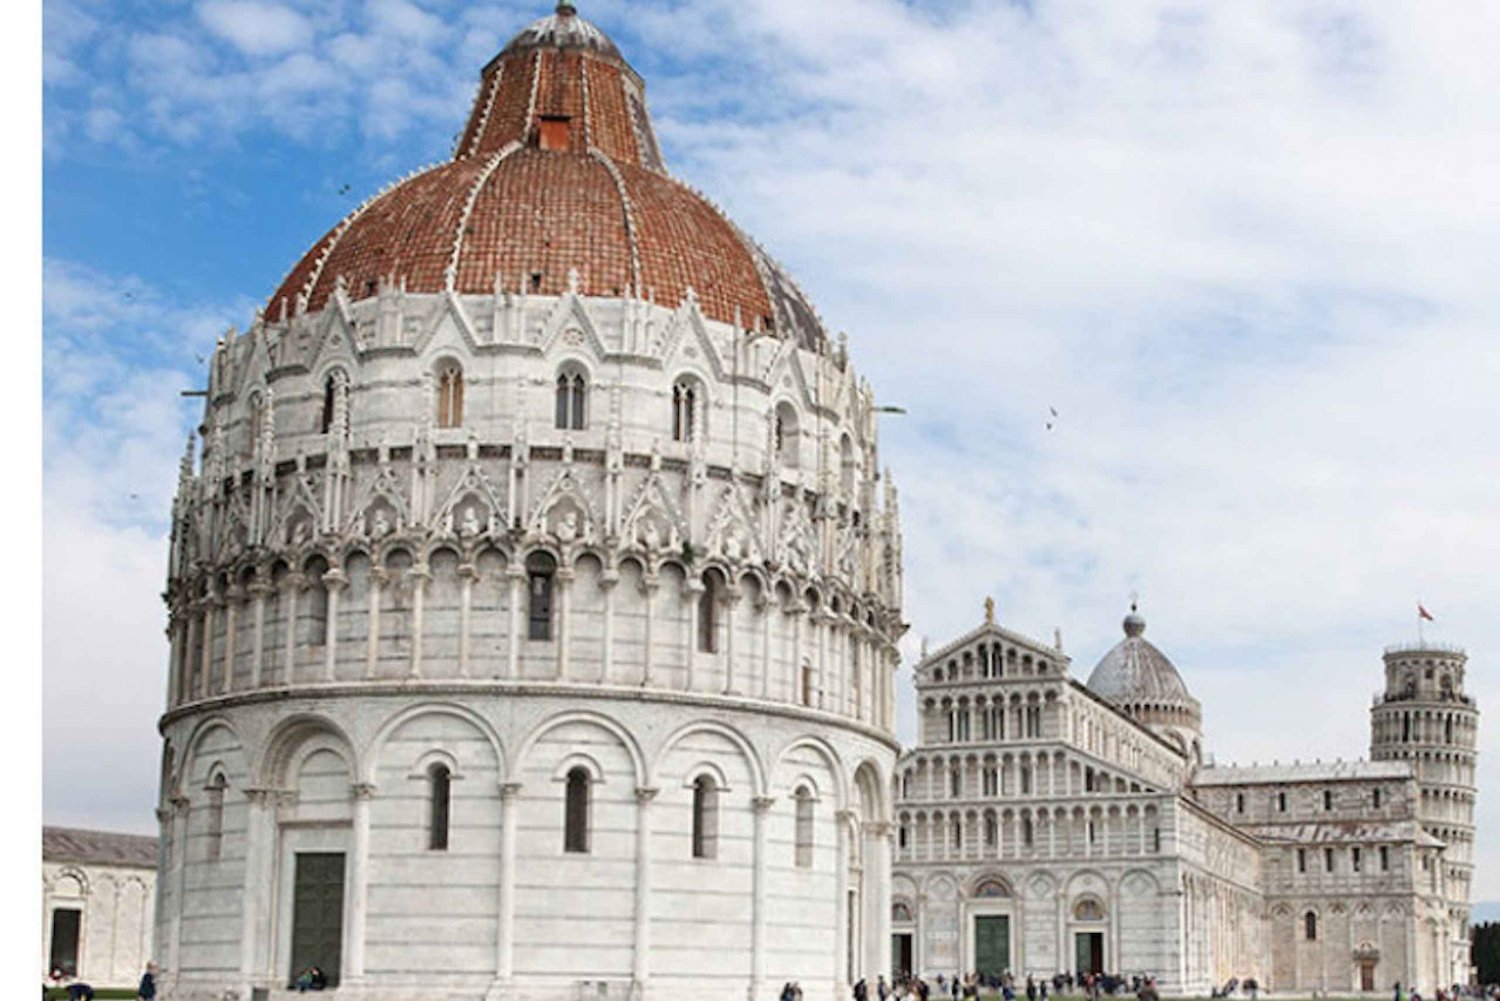 Pisa: Square of Miracles adgangsbilletter og lydguide